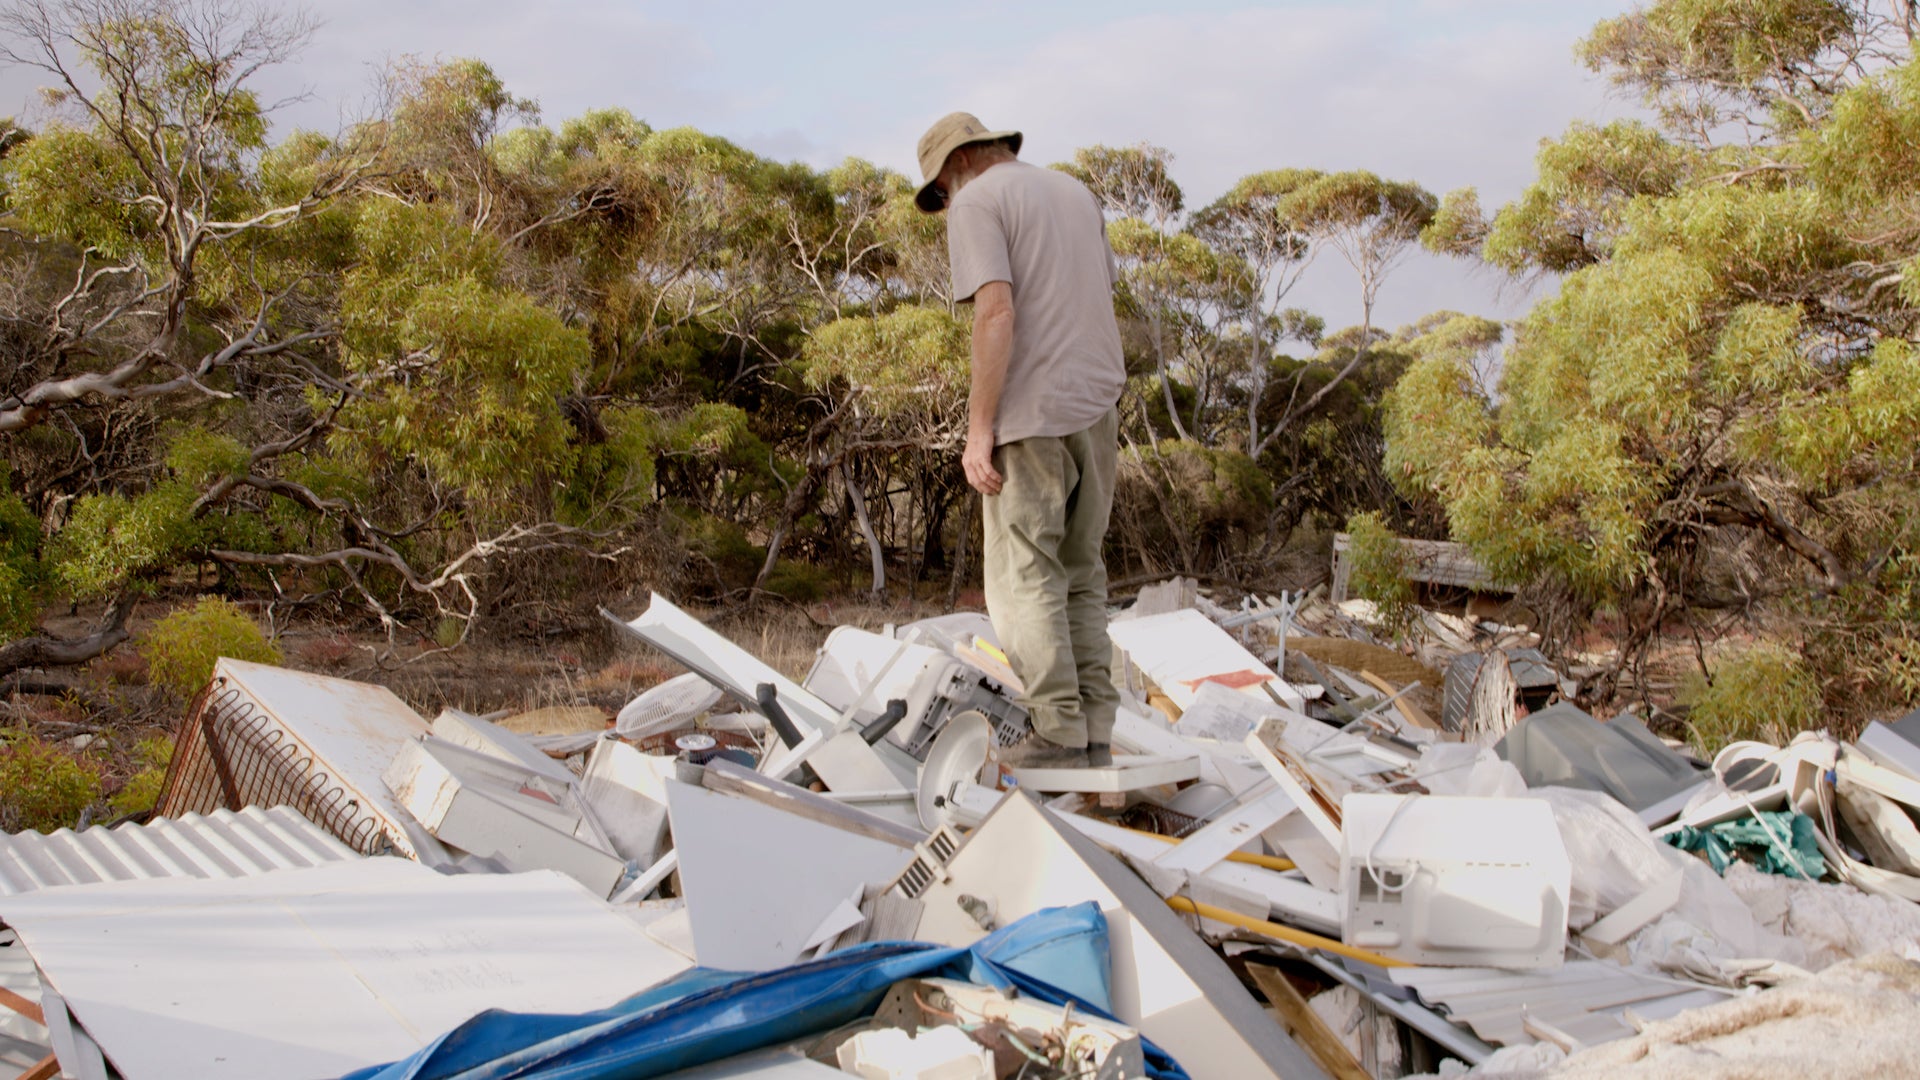 Opening image: Addy Jones standing on top of a ‘boneyard’ (rubbish dump) deep in the Australian bush, taken from Farm Boys episode one, ‘Junk Wizards’.